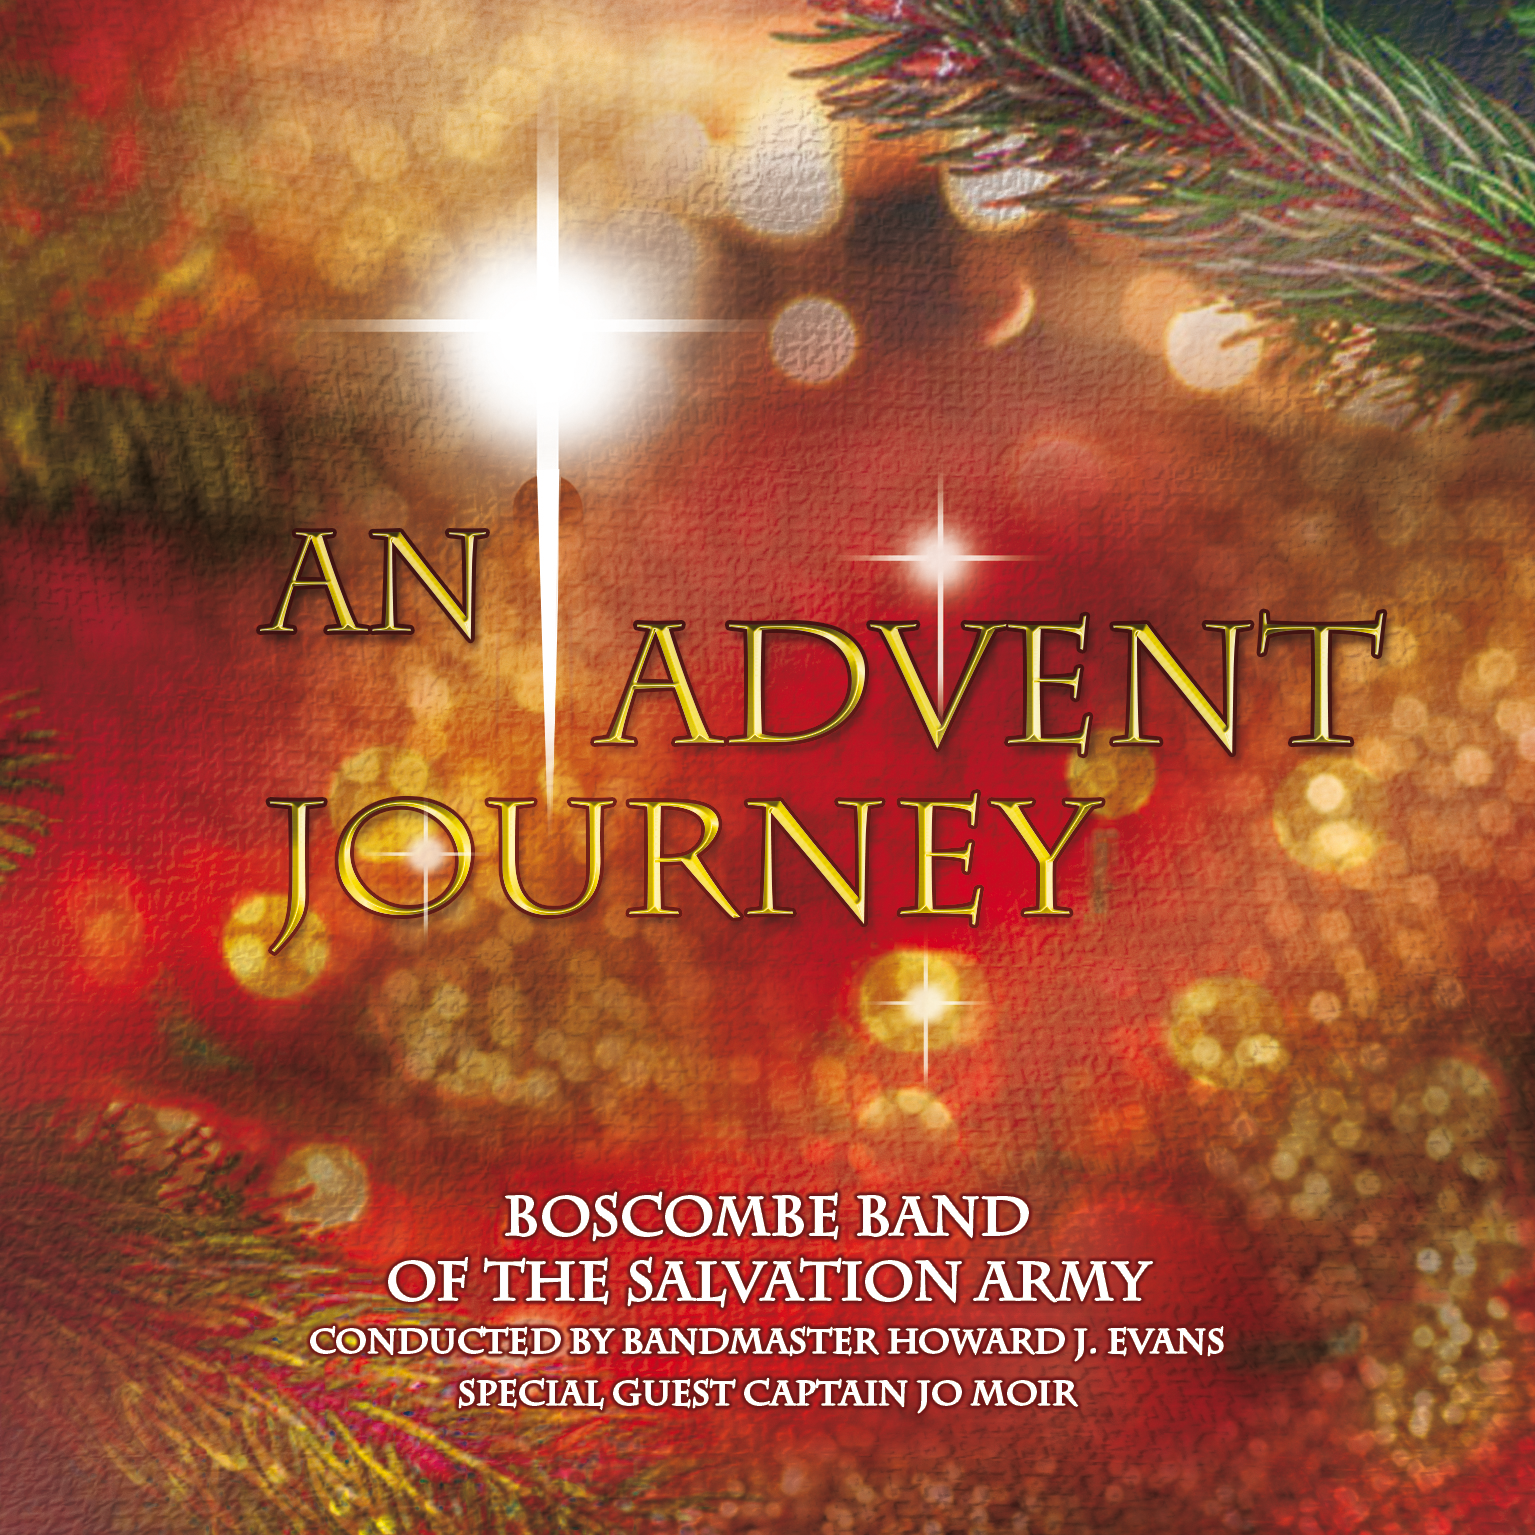 An Advent Journey - CD